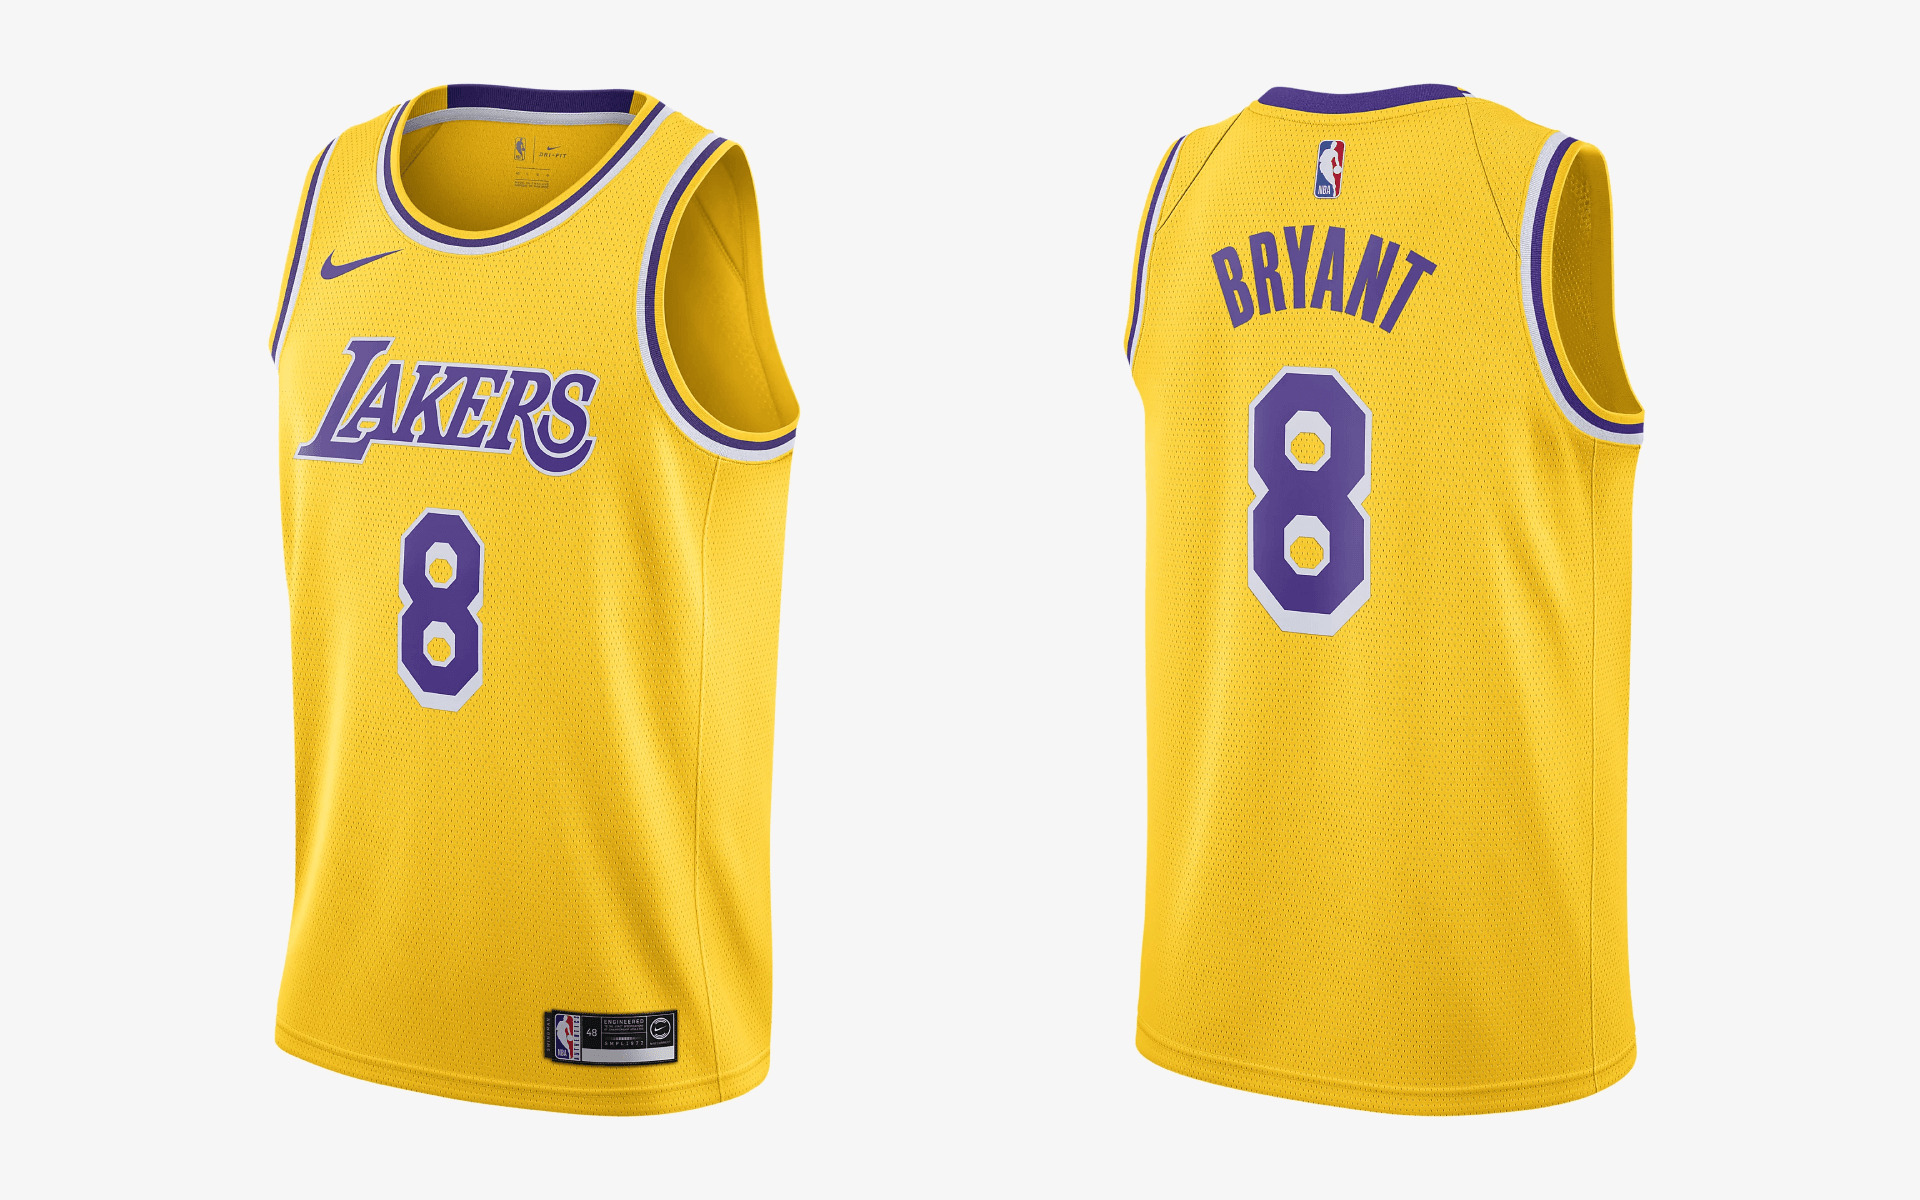 # 24 Kobe Bryant Los Angeles Lakers Unisex Ärmelloses T-Shirt-Herren Basketball Jersey Trainingsanzug Kinder Sweatshirt Stickerei Trainingsanzug Set S-5XL